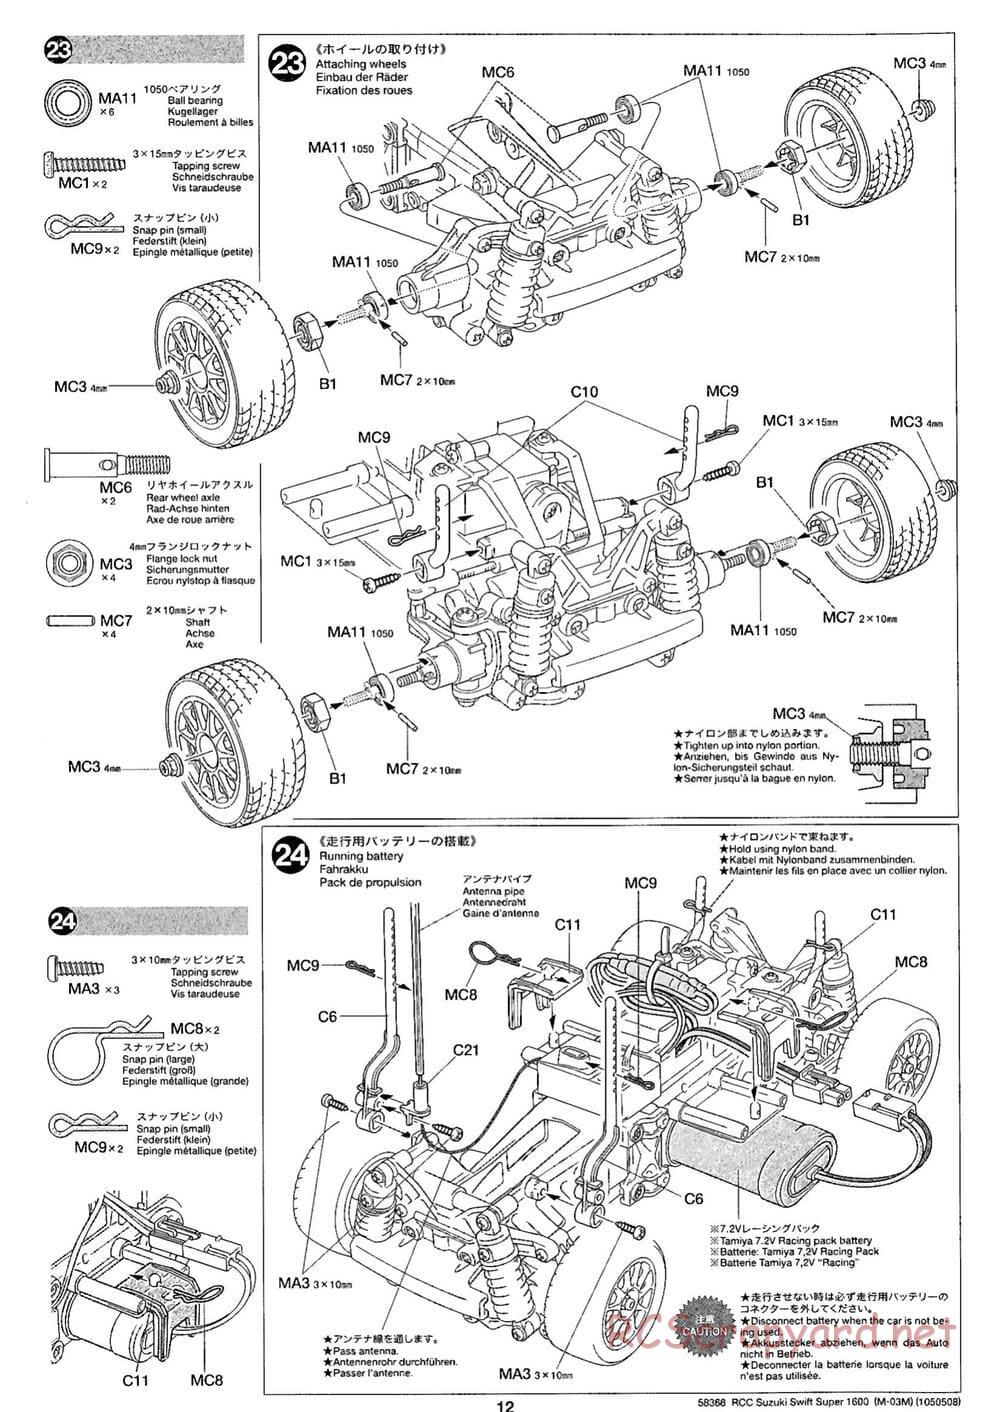 Tamiya - Suzuki Swift Super 1600 - M03M Chassis - Manual - Page 12